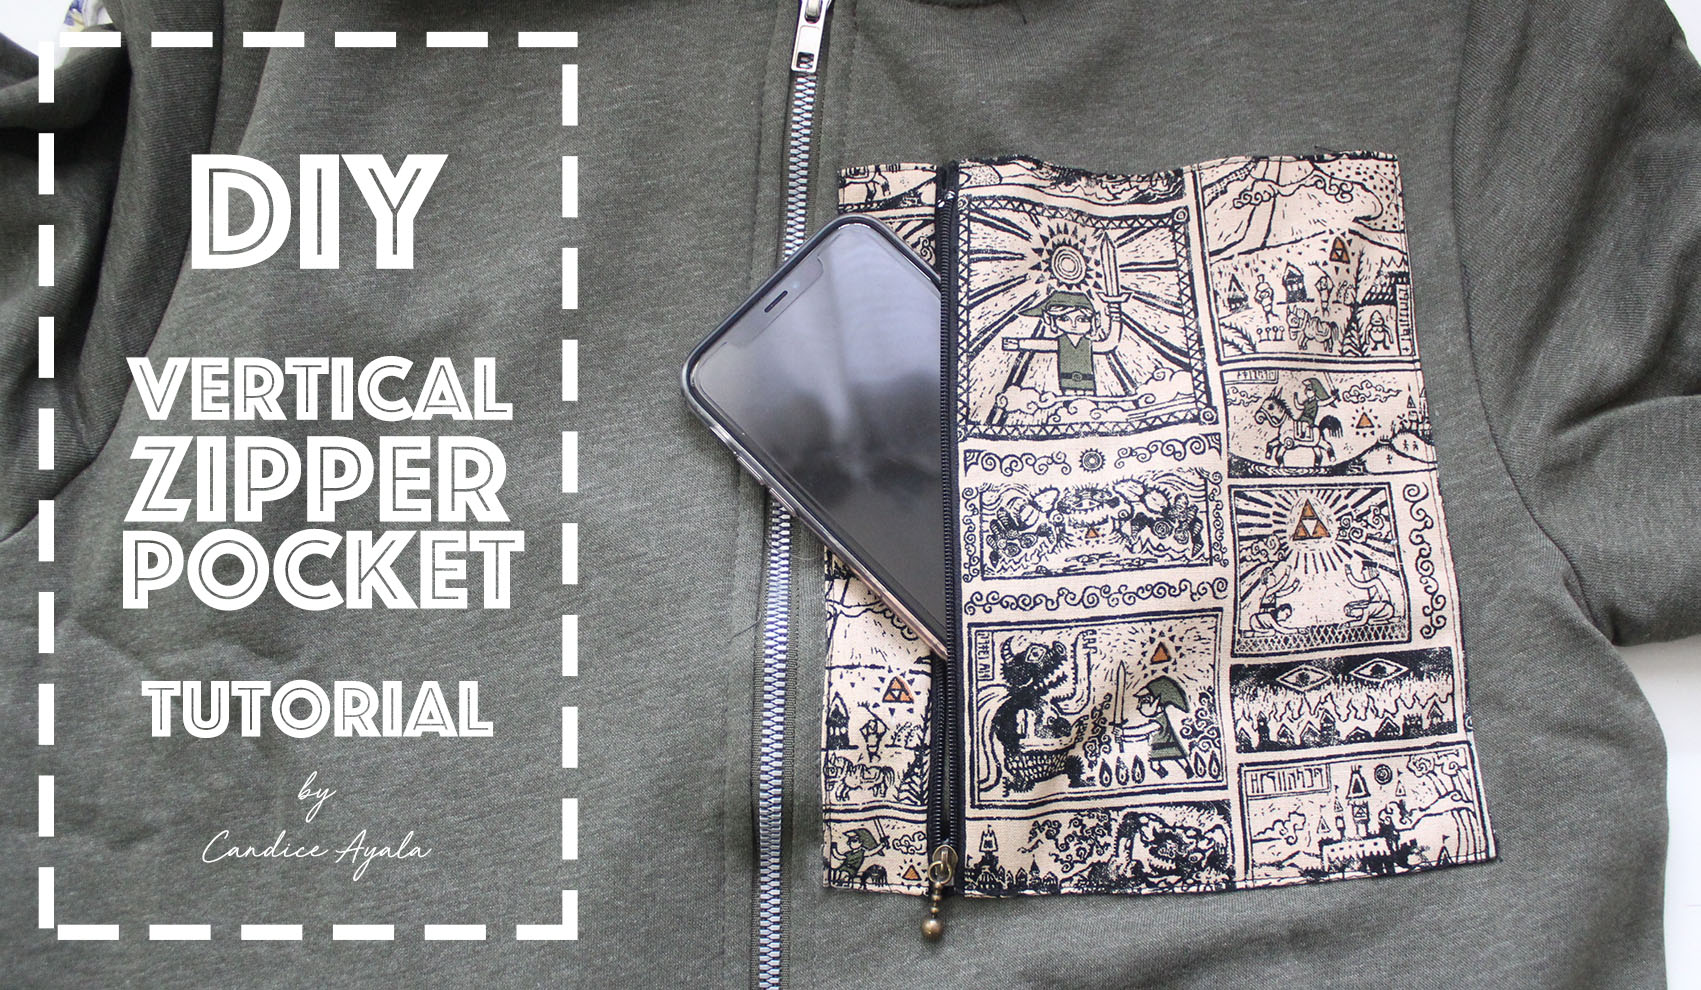 DIY Vertical Zipper Pocket Tutorial by Candice Ayala